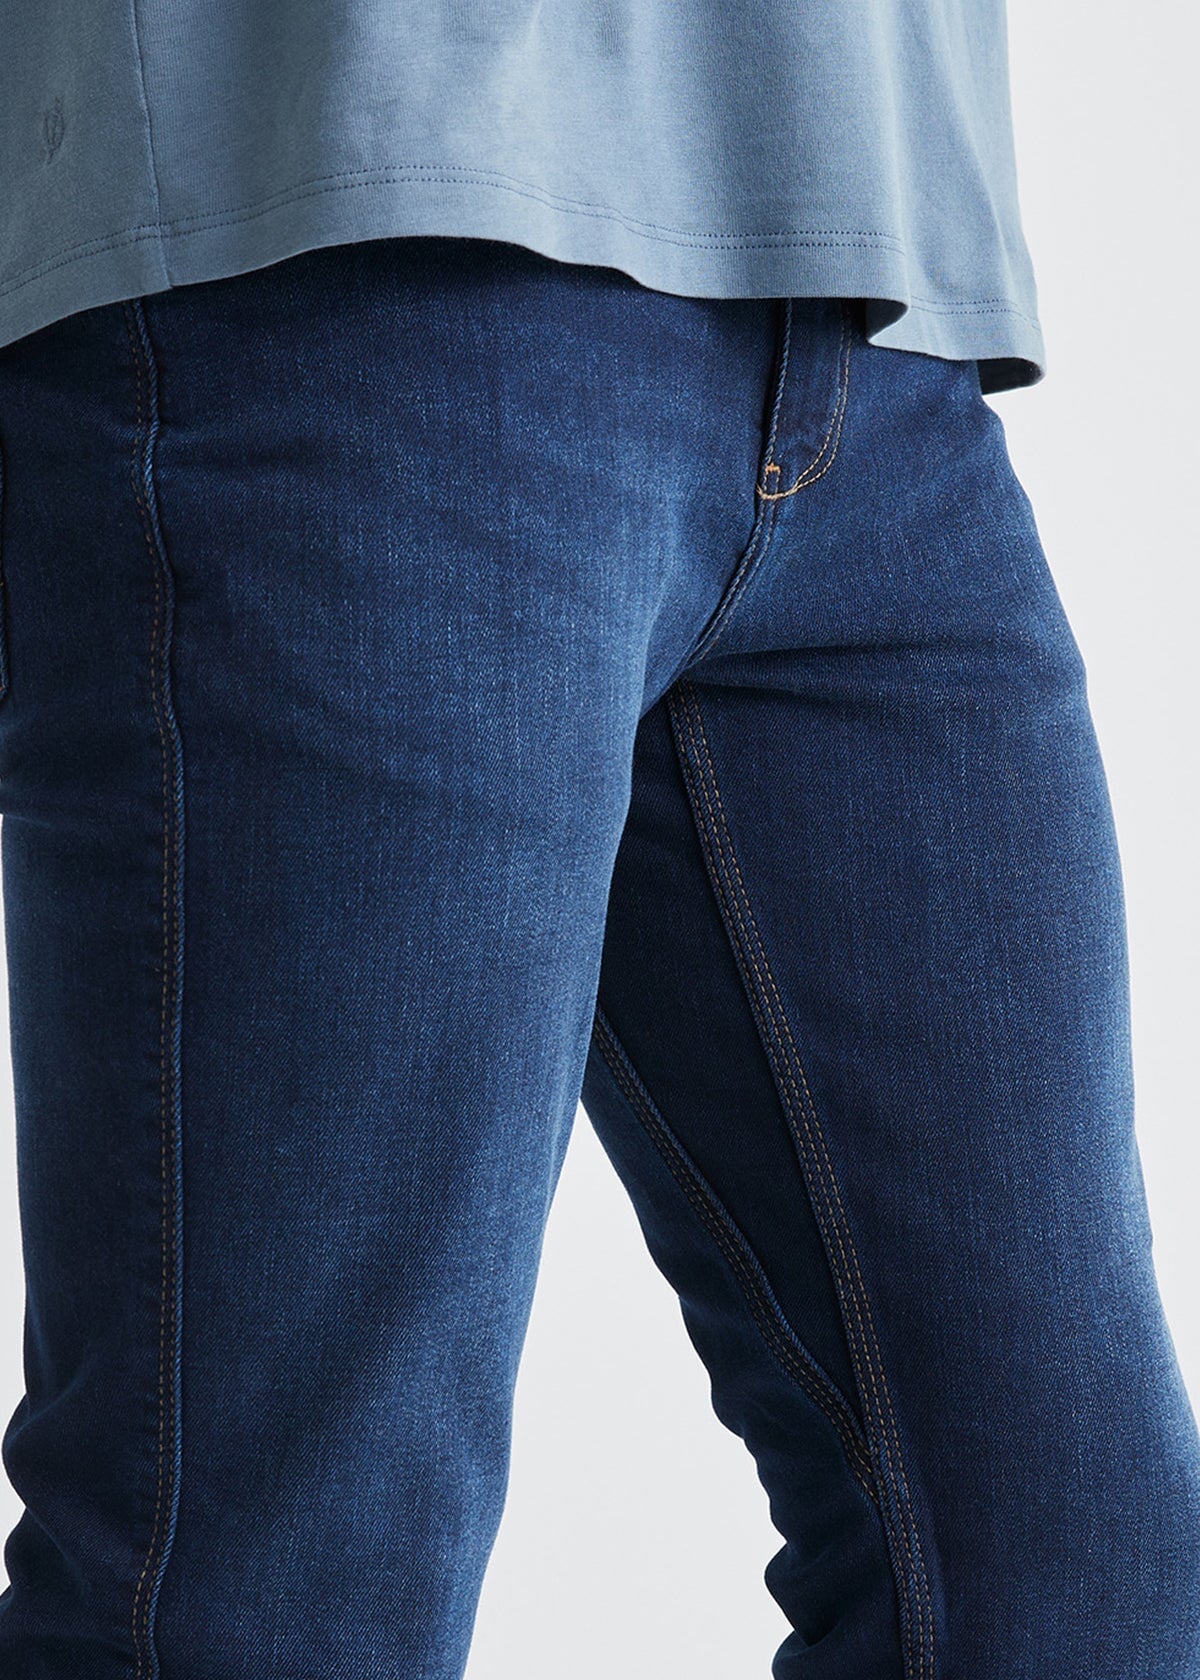 Men's Dark Stone Slim Fit Stretch Jeans